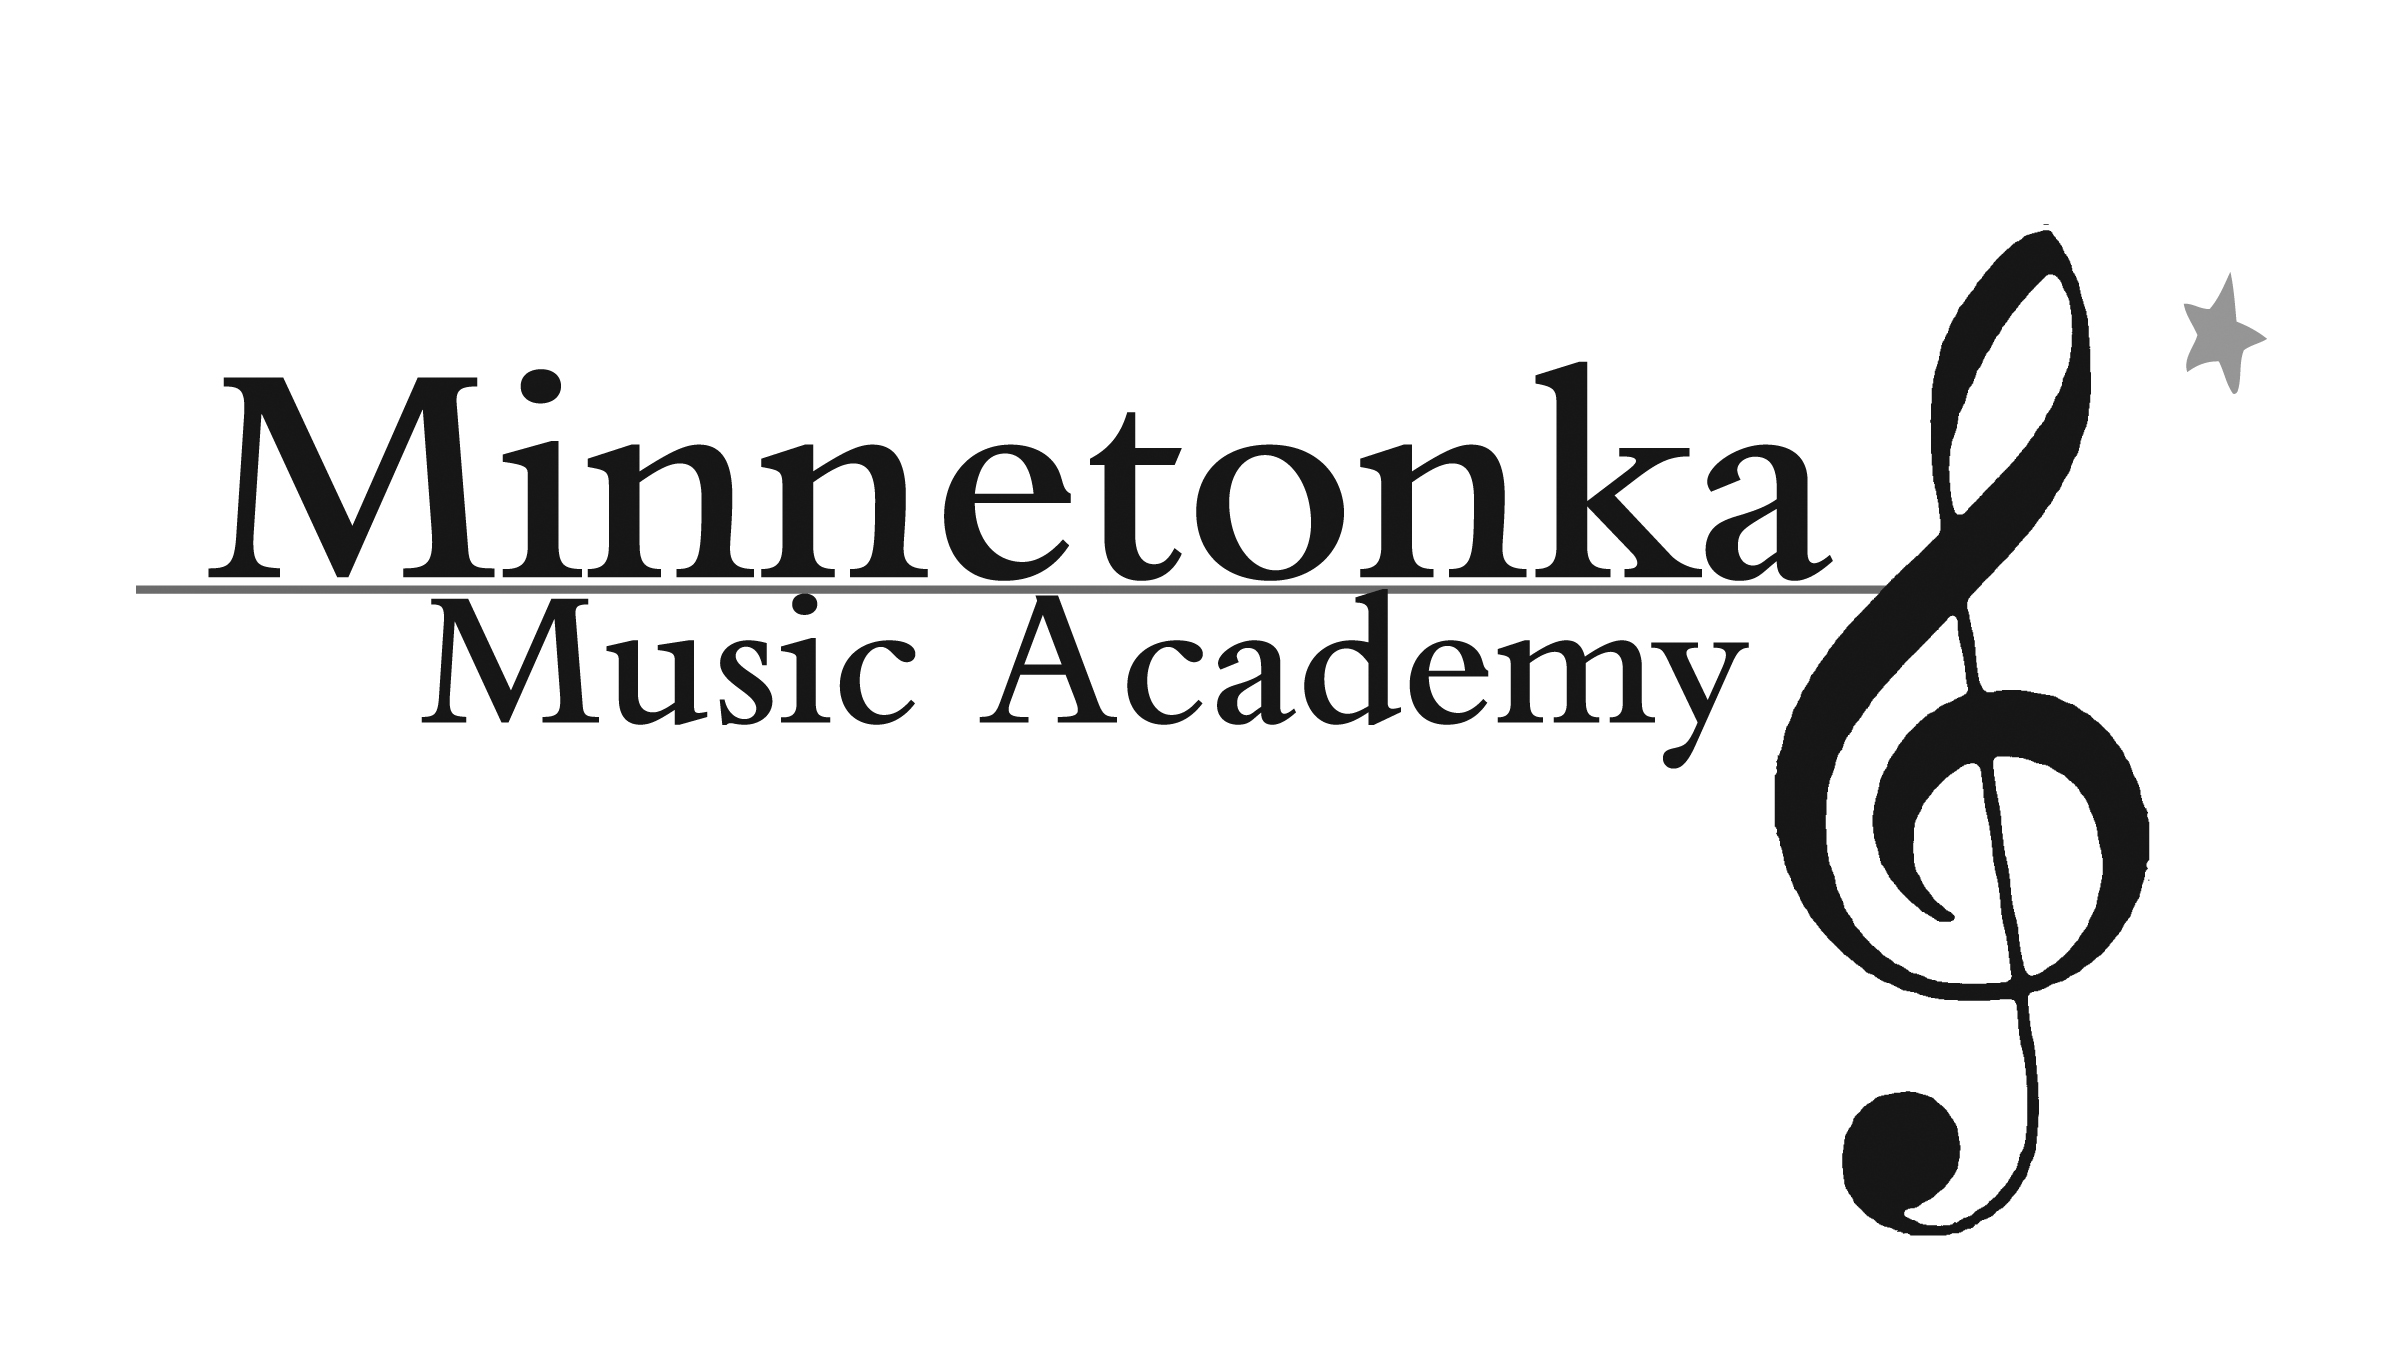 Minnetonka音乐学院